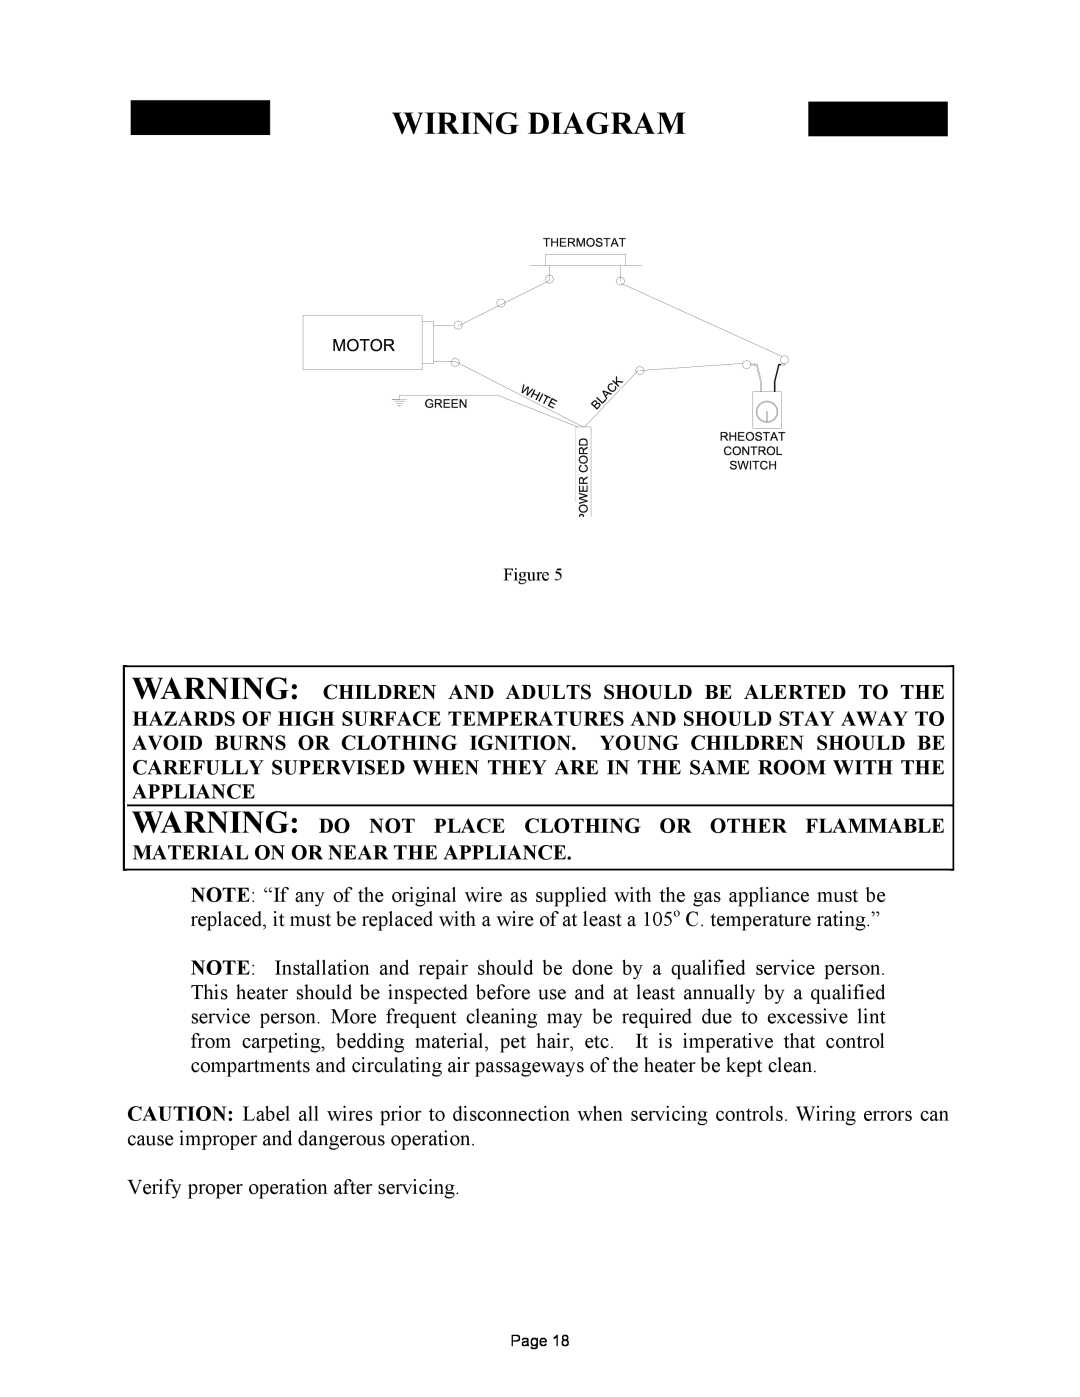 New Buck Corporation 384 manual Wiring Diagram 